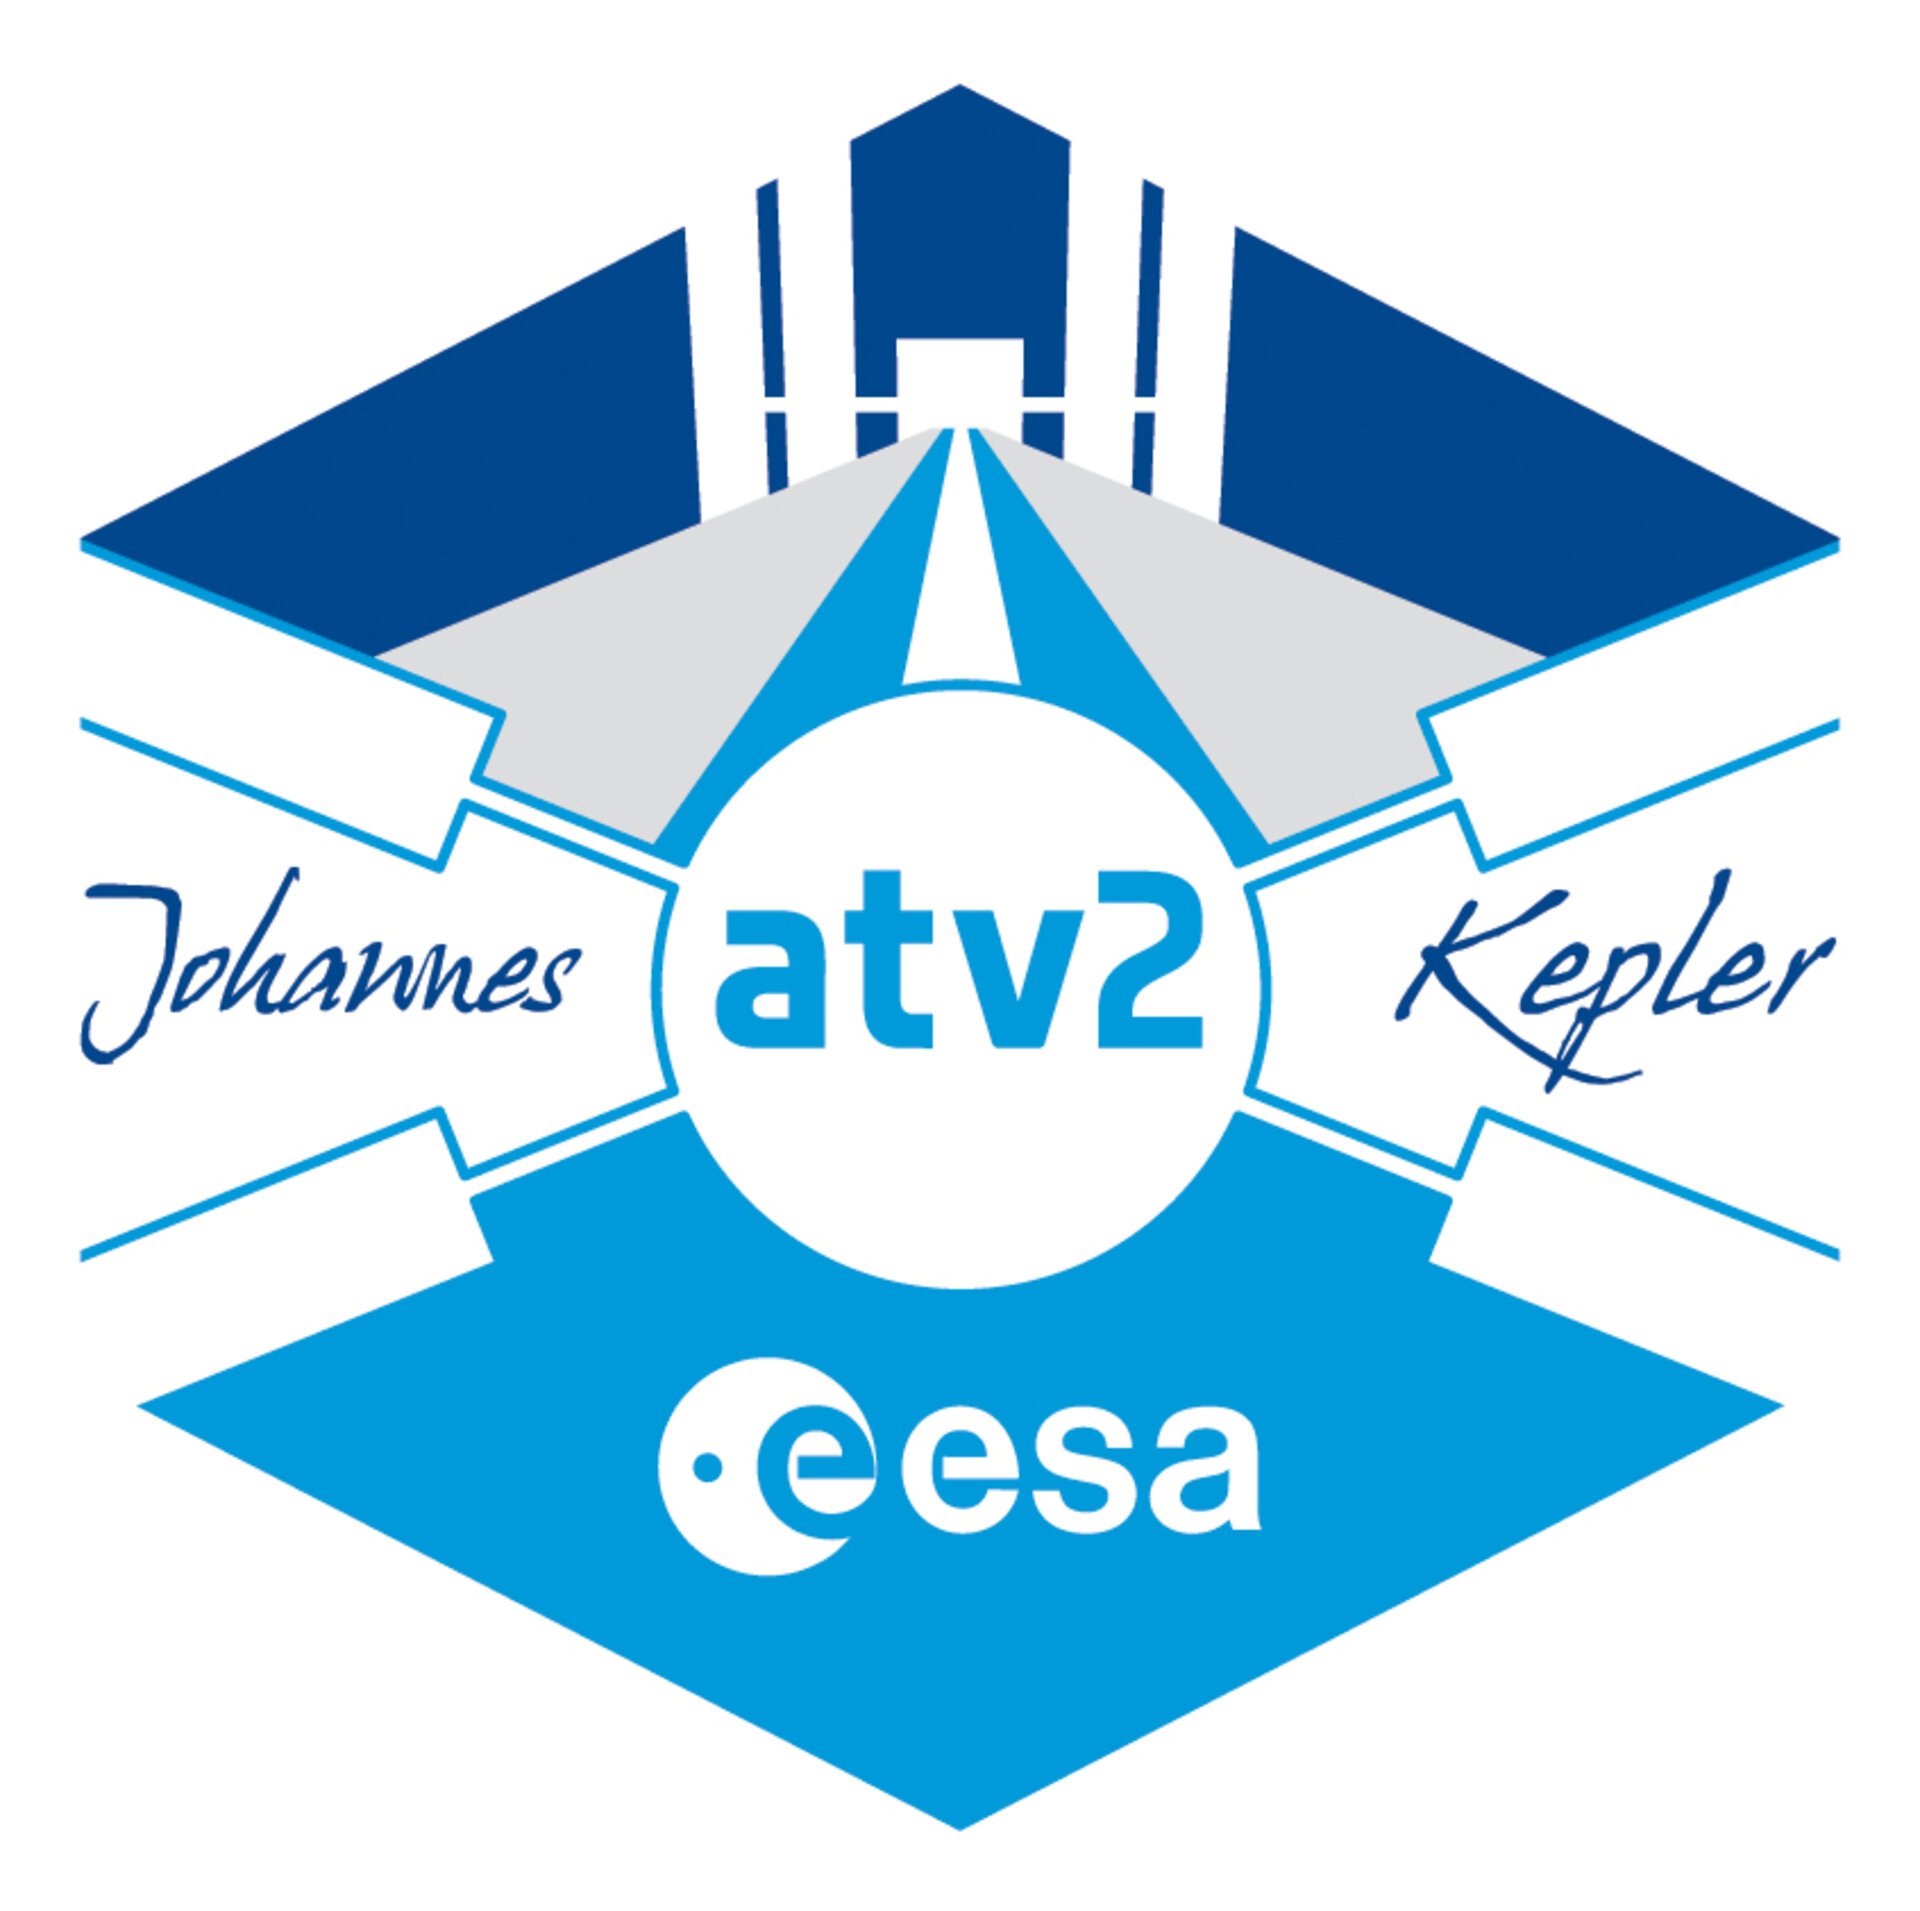 ATV-2 Johannes Kepler mission logo